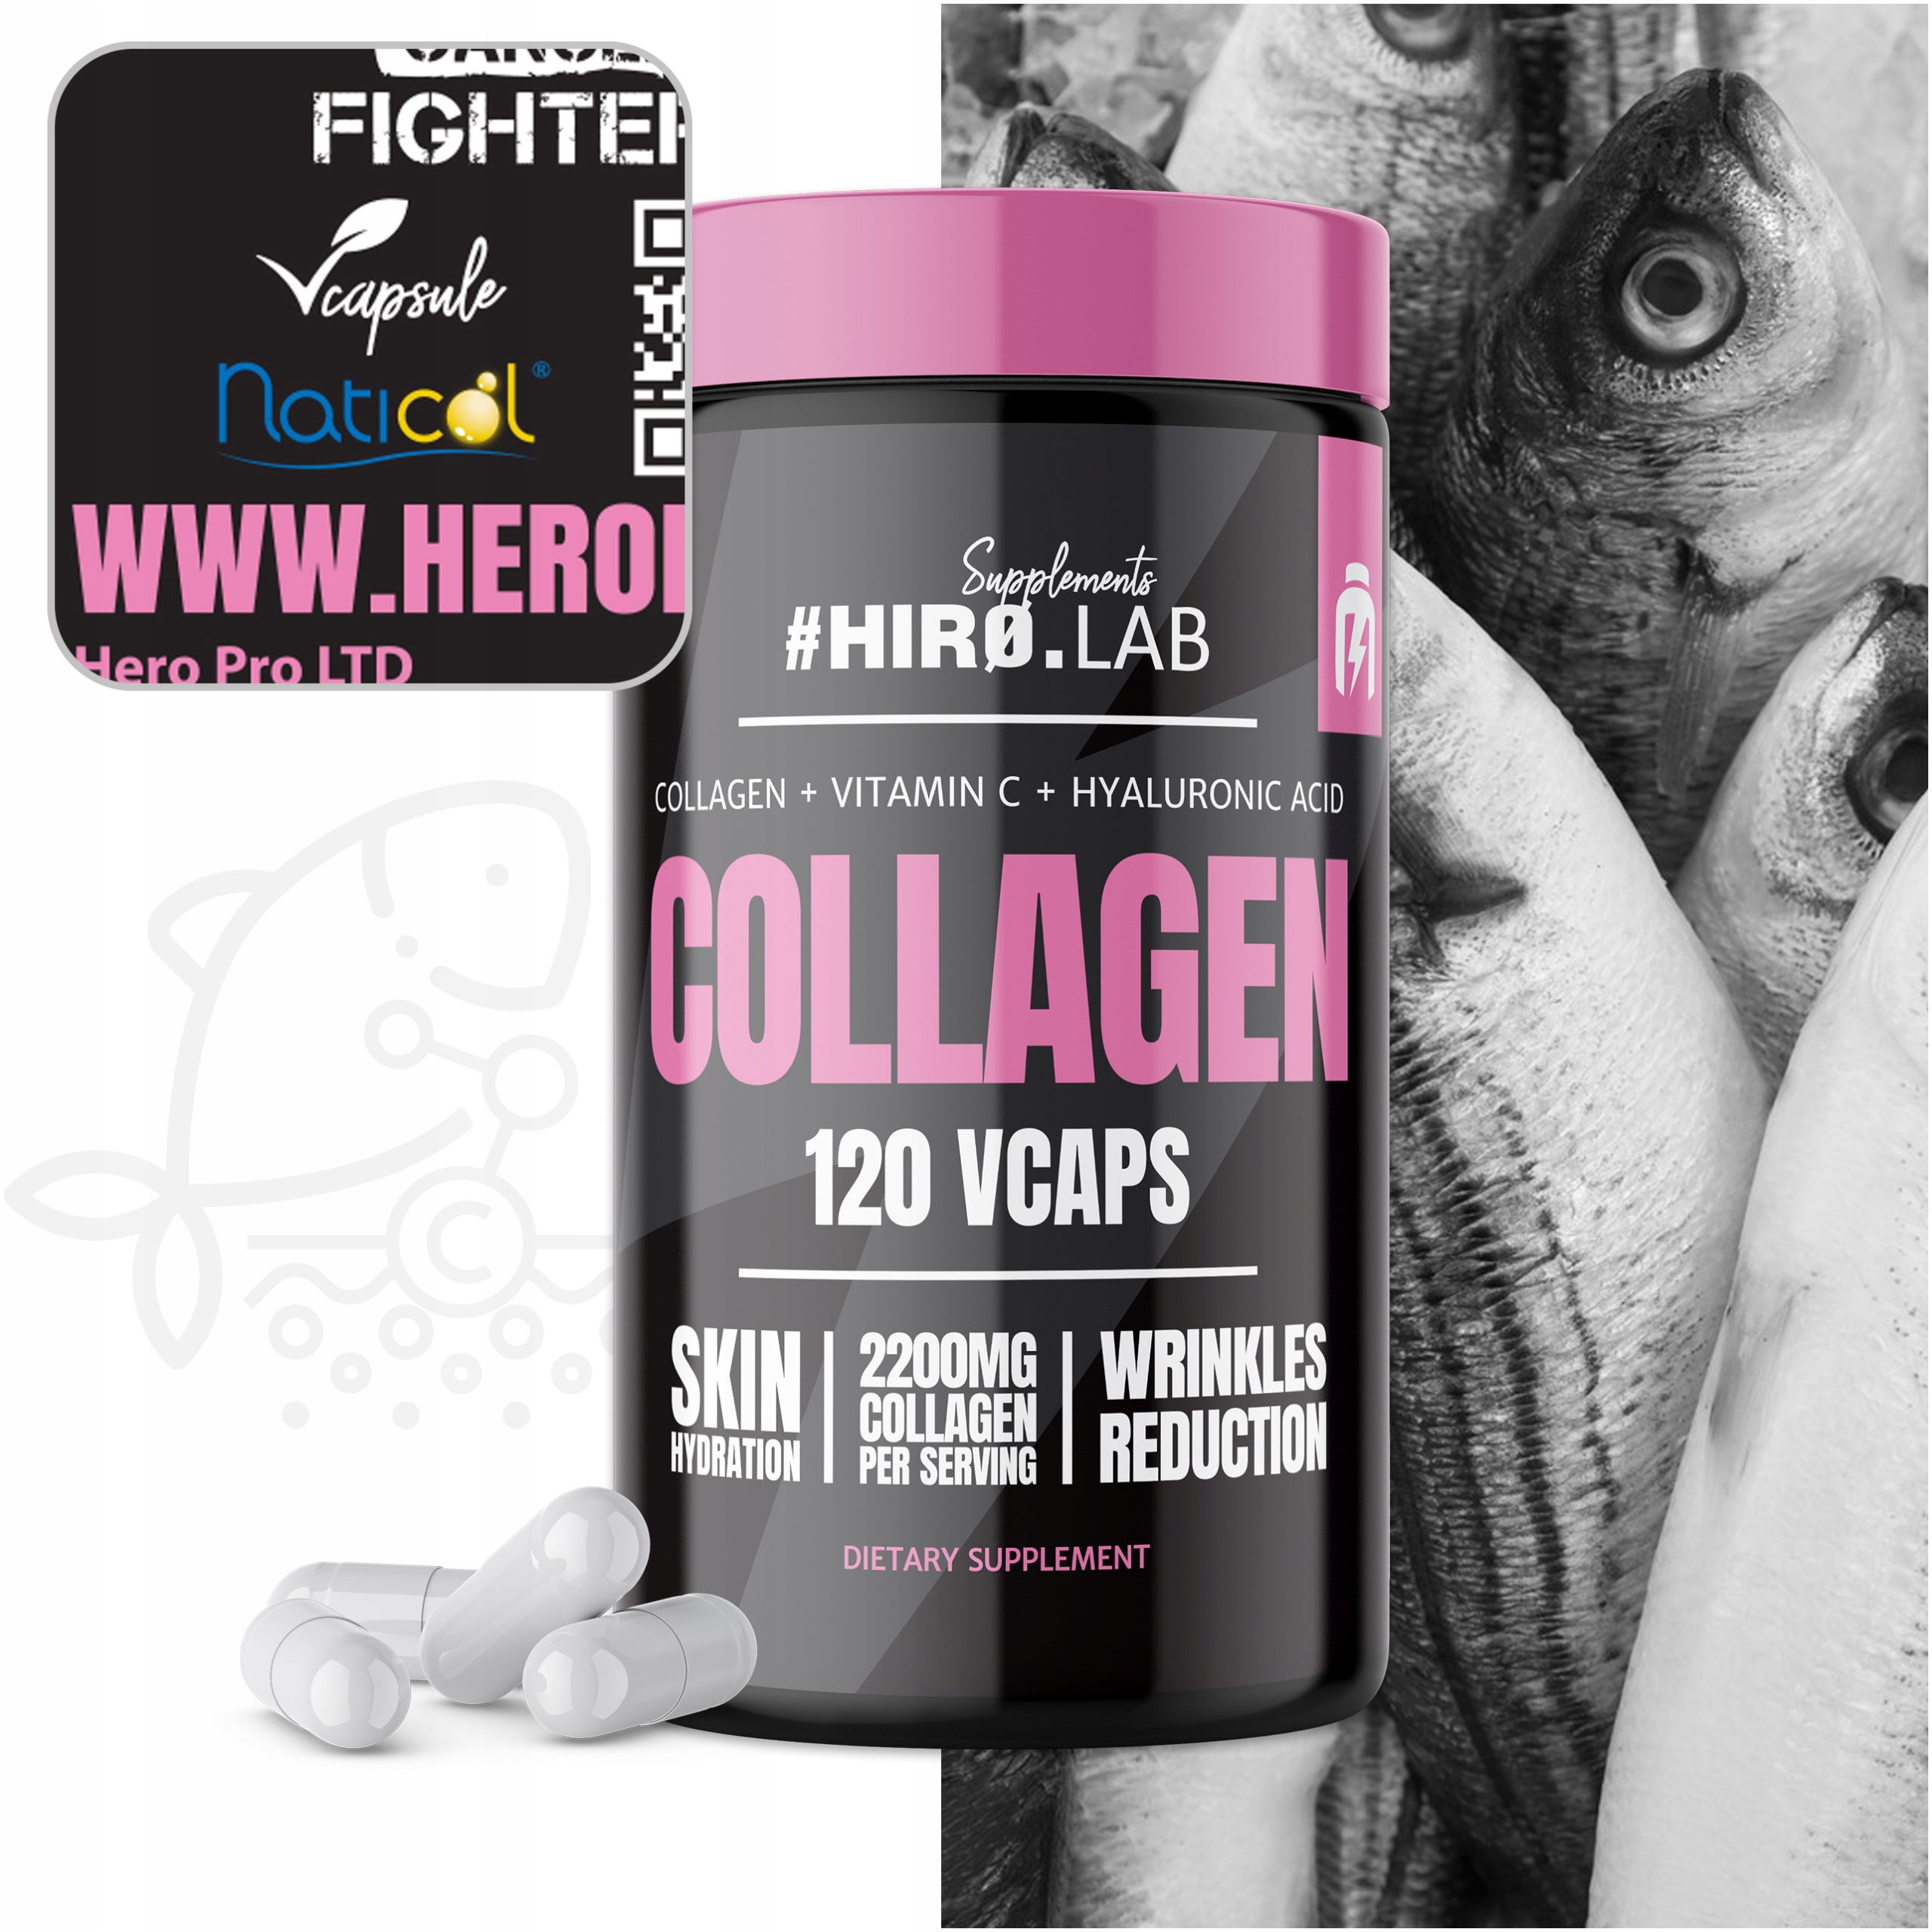 Hiro.Lab Collagen 120caps KOLAGEN KWAS HIALURONOWY Producent Hiro.Lab